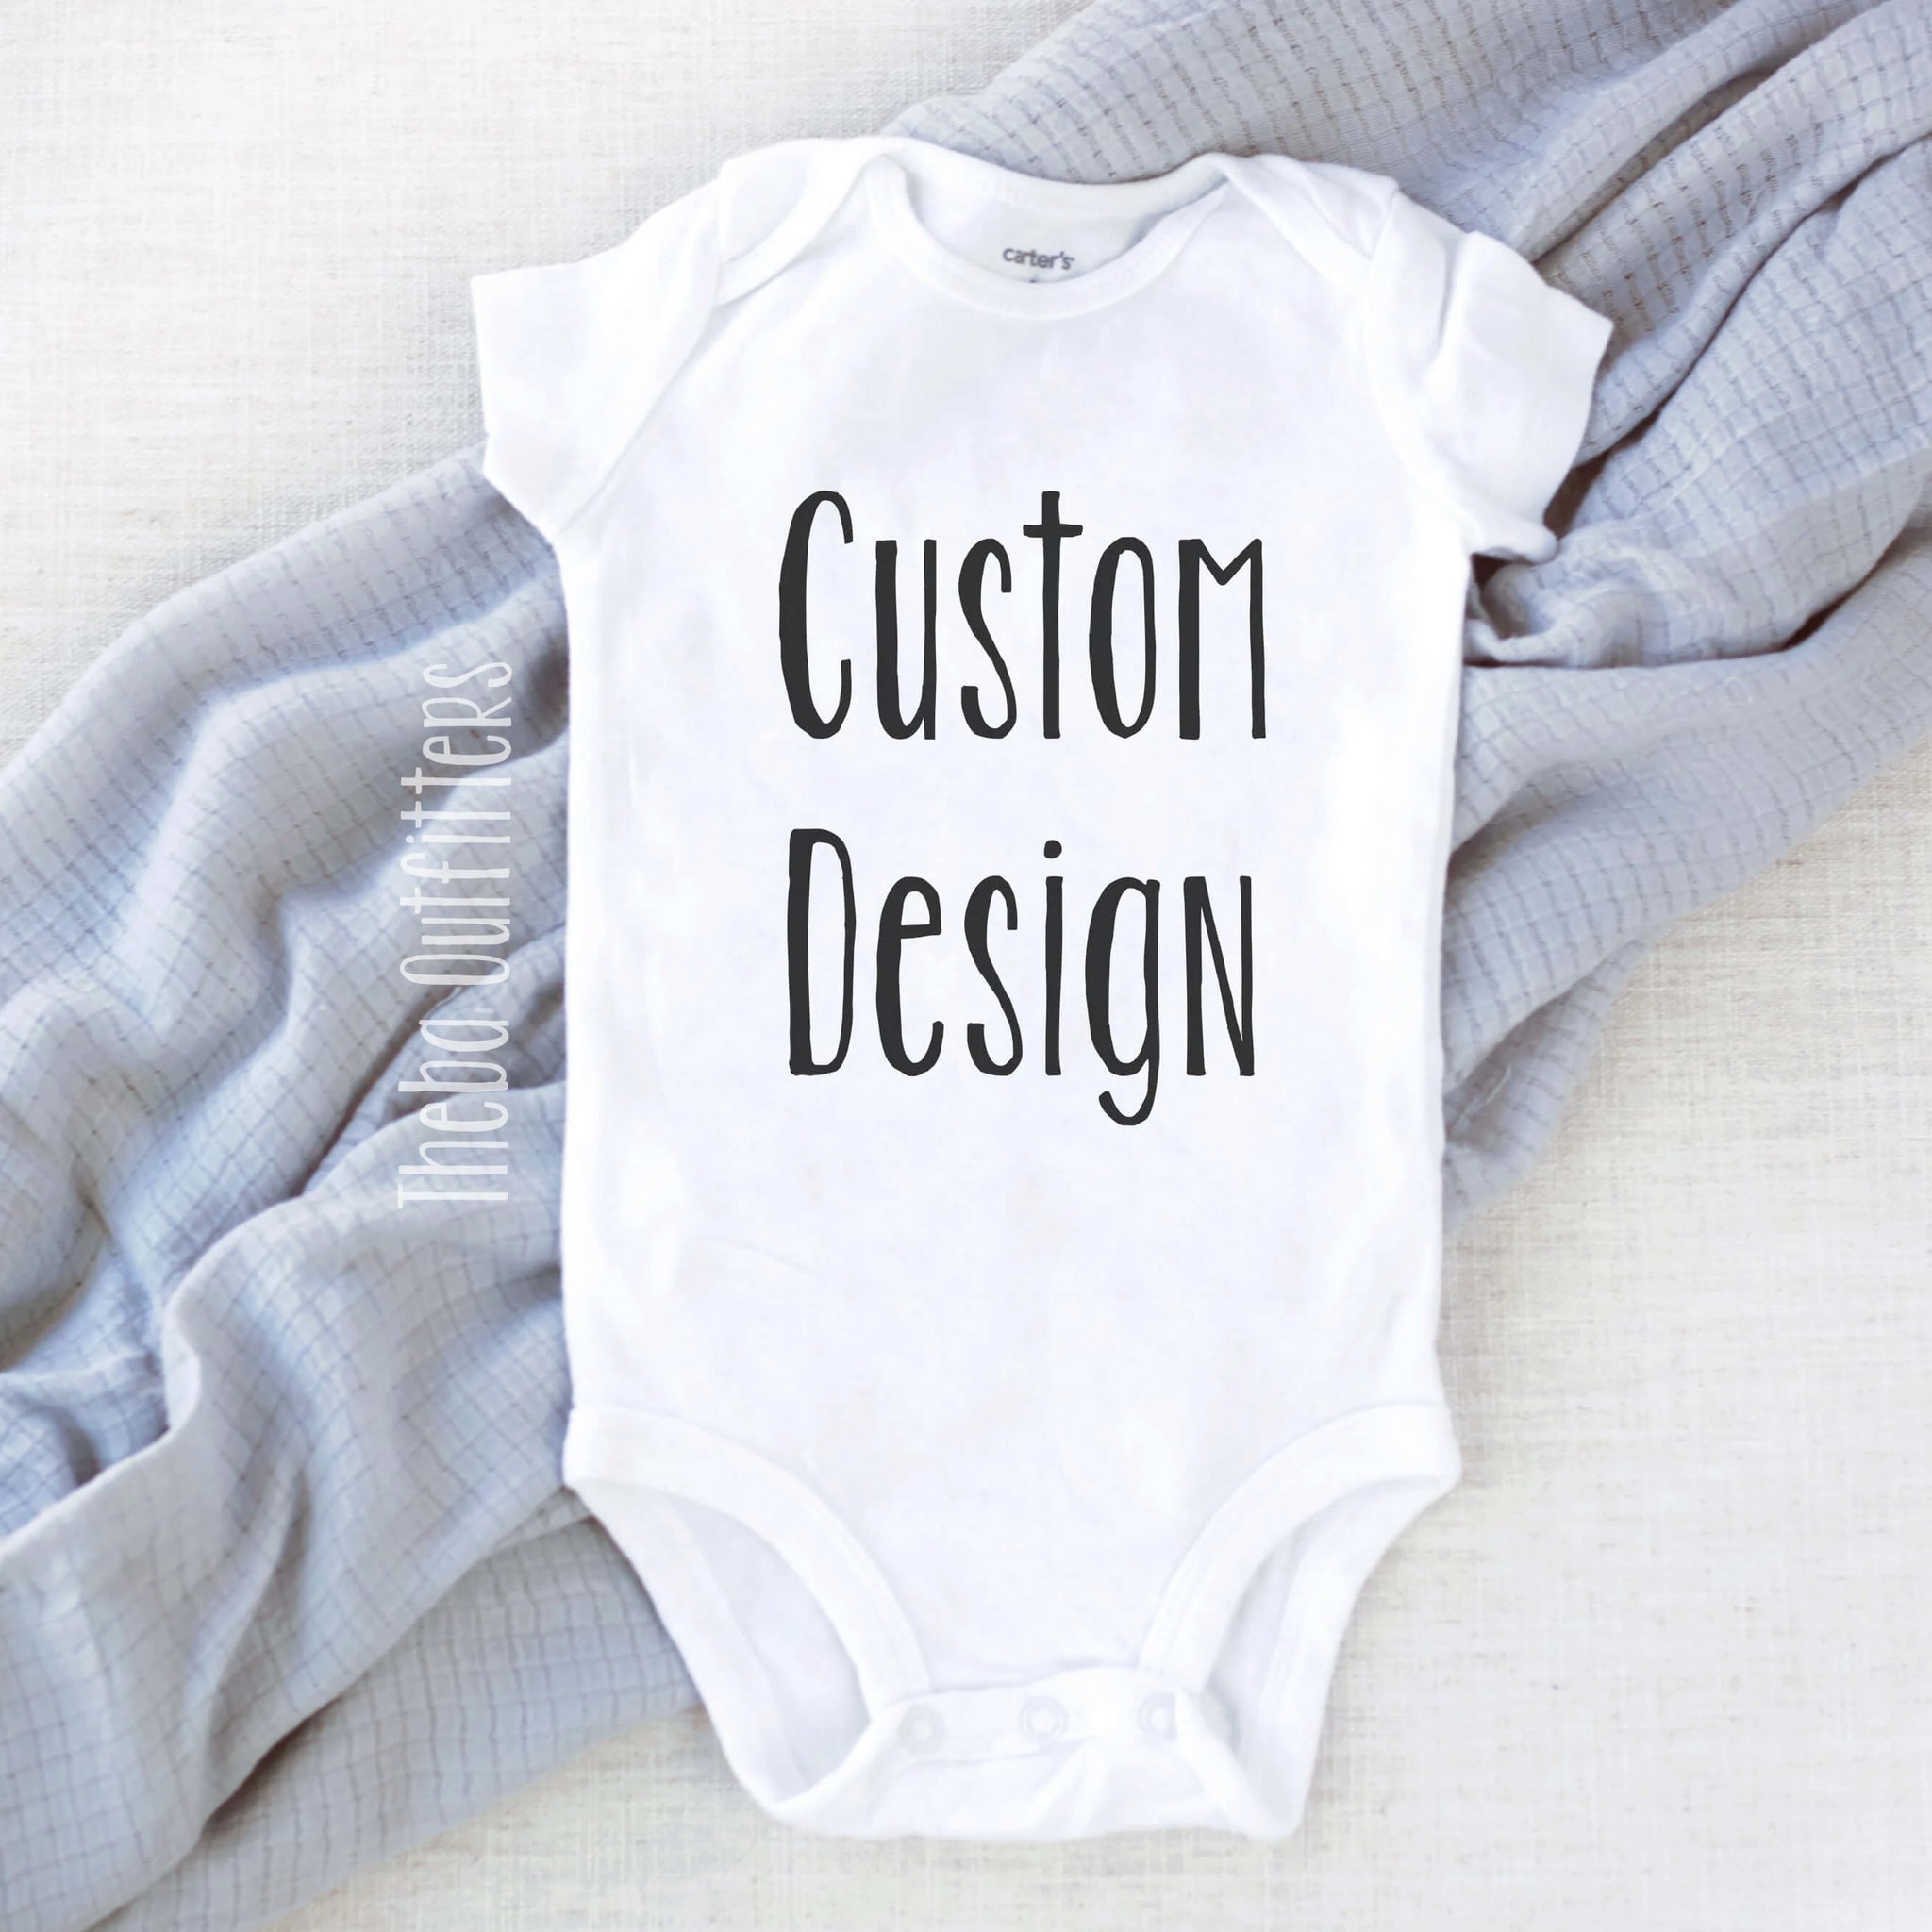 custom design baby onesie